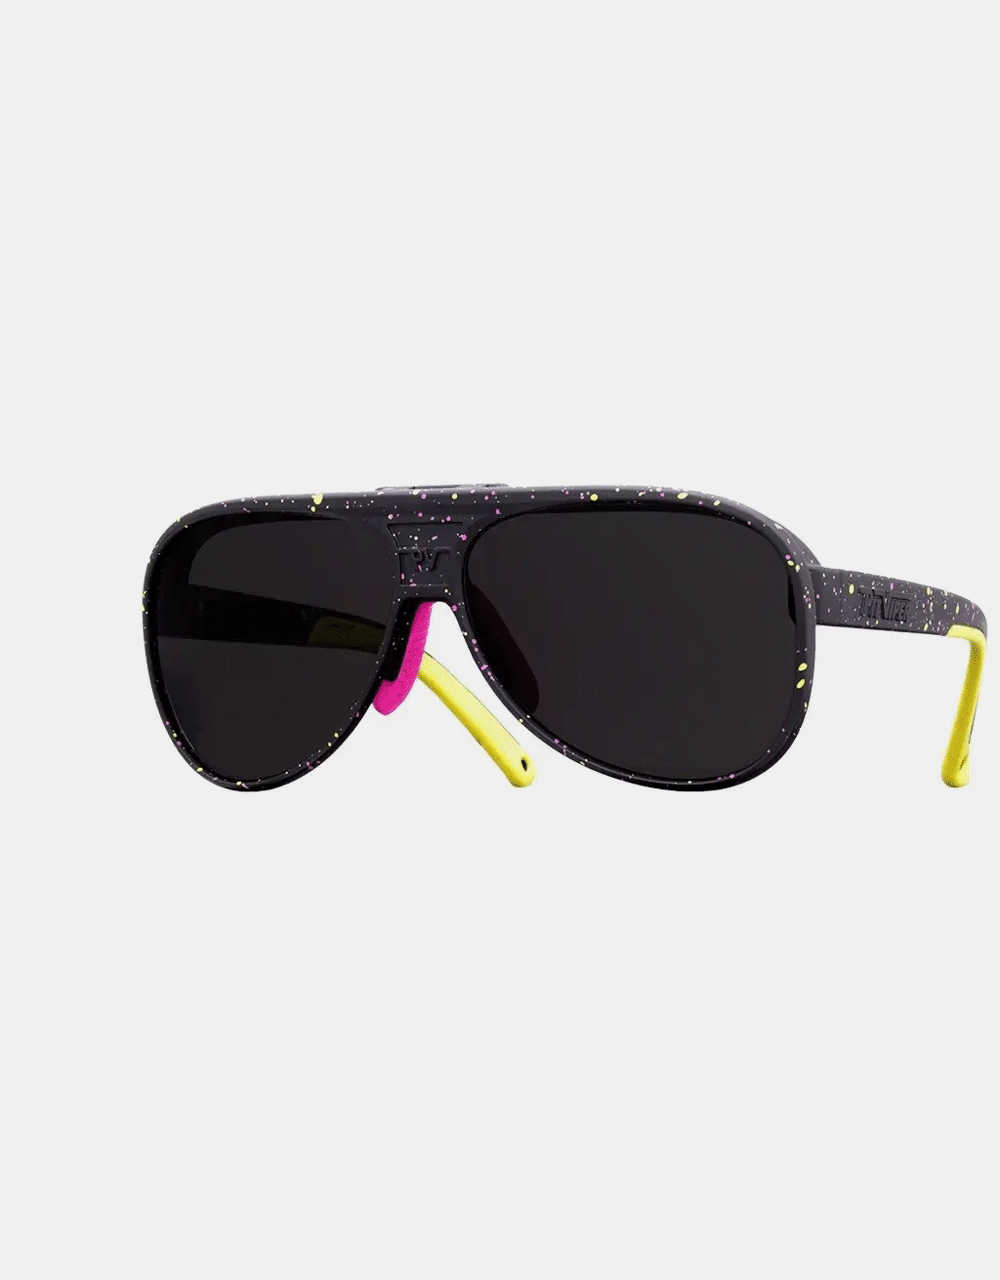 Pit Viper '93 Dusk Lift-Offs Sunglasses - Smoke